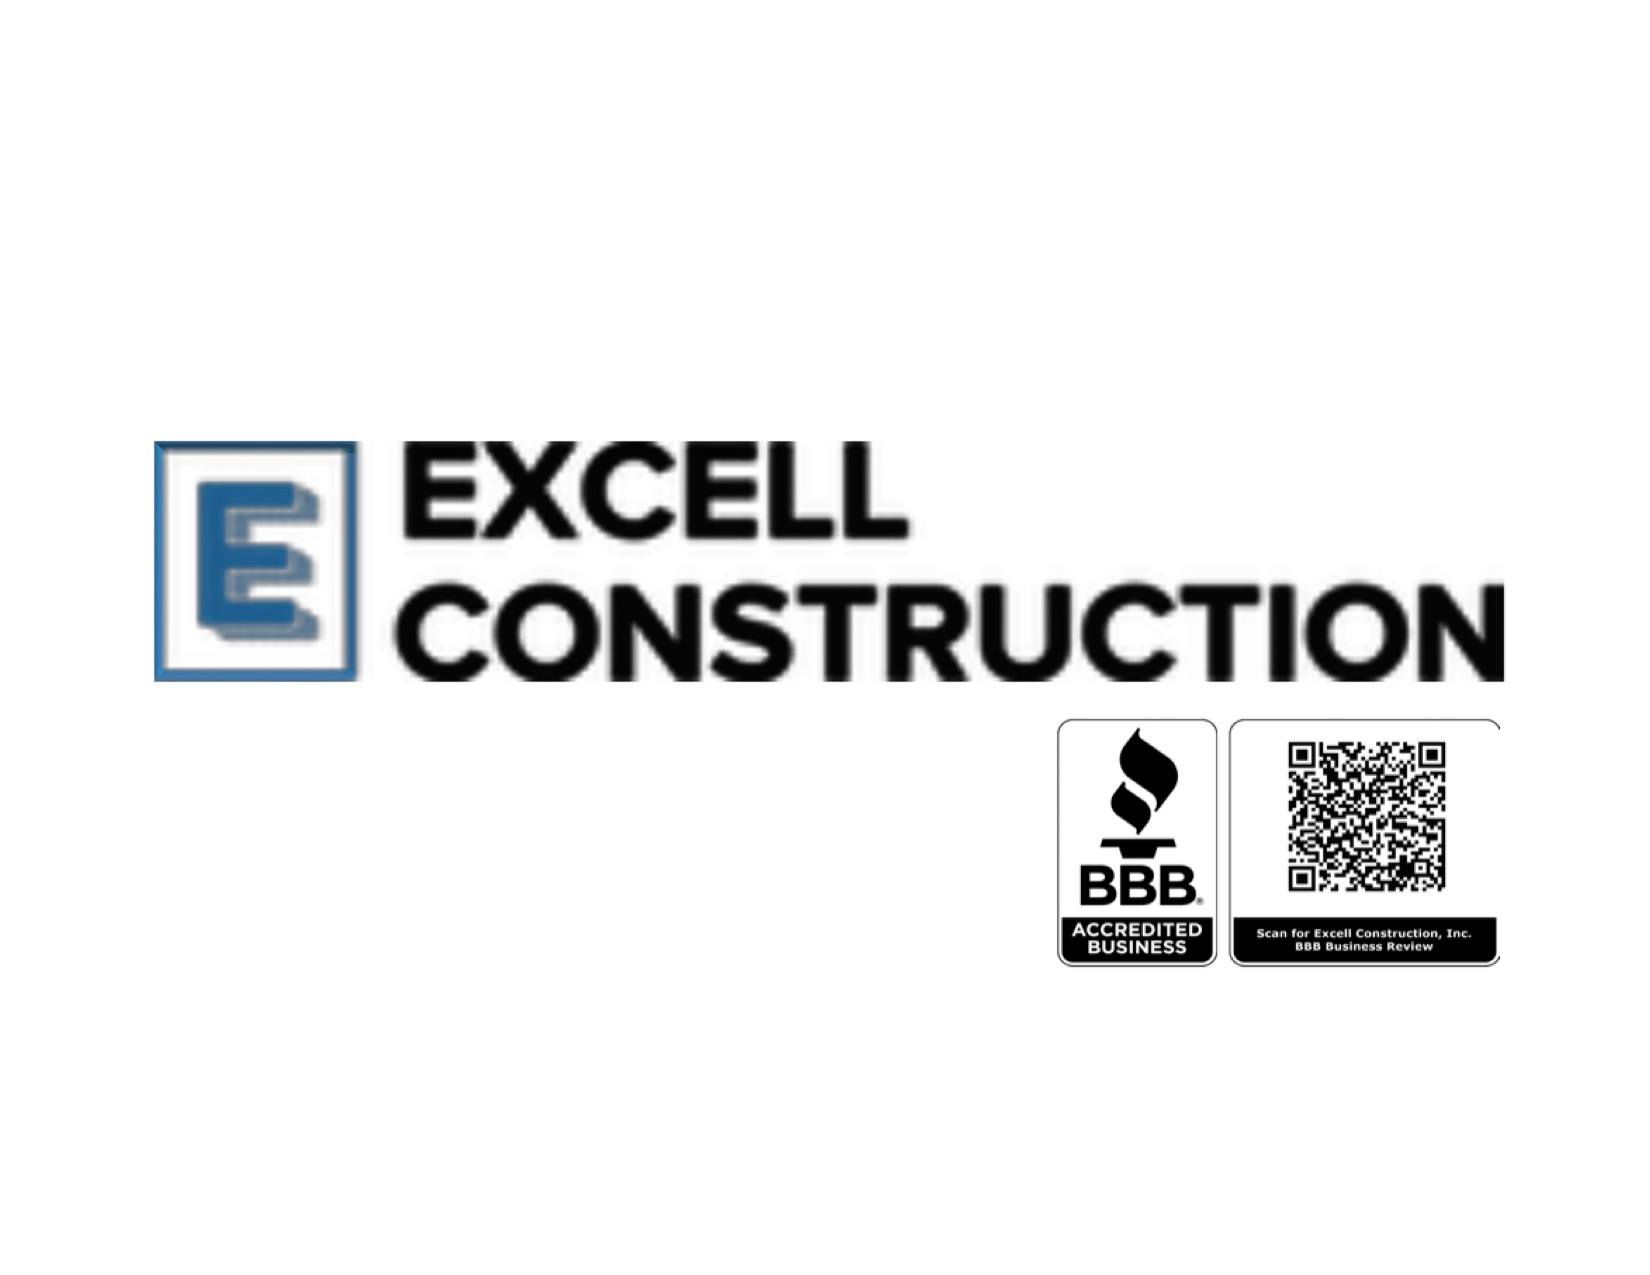 Excell-Construction-logo.jpg